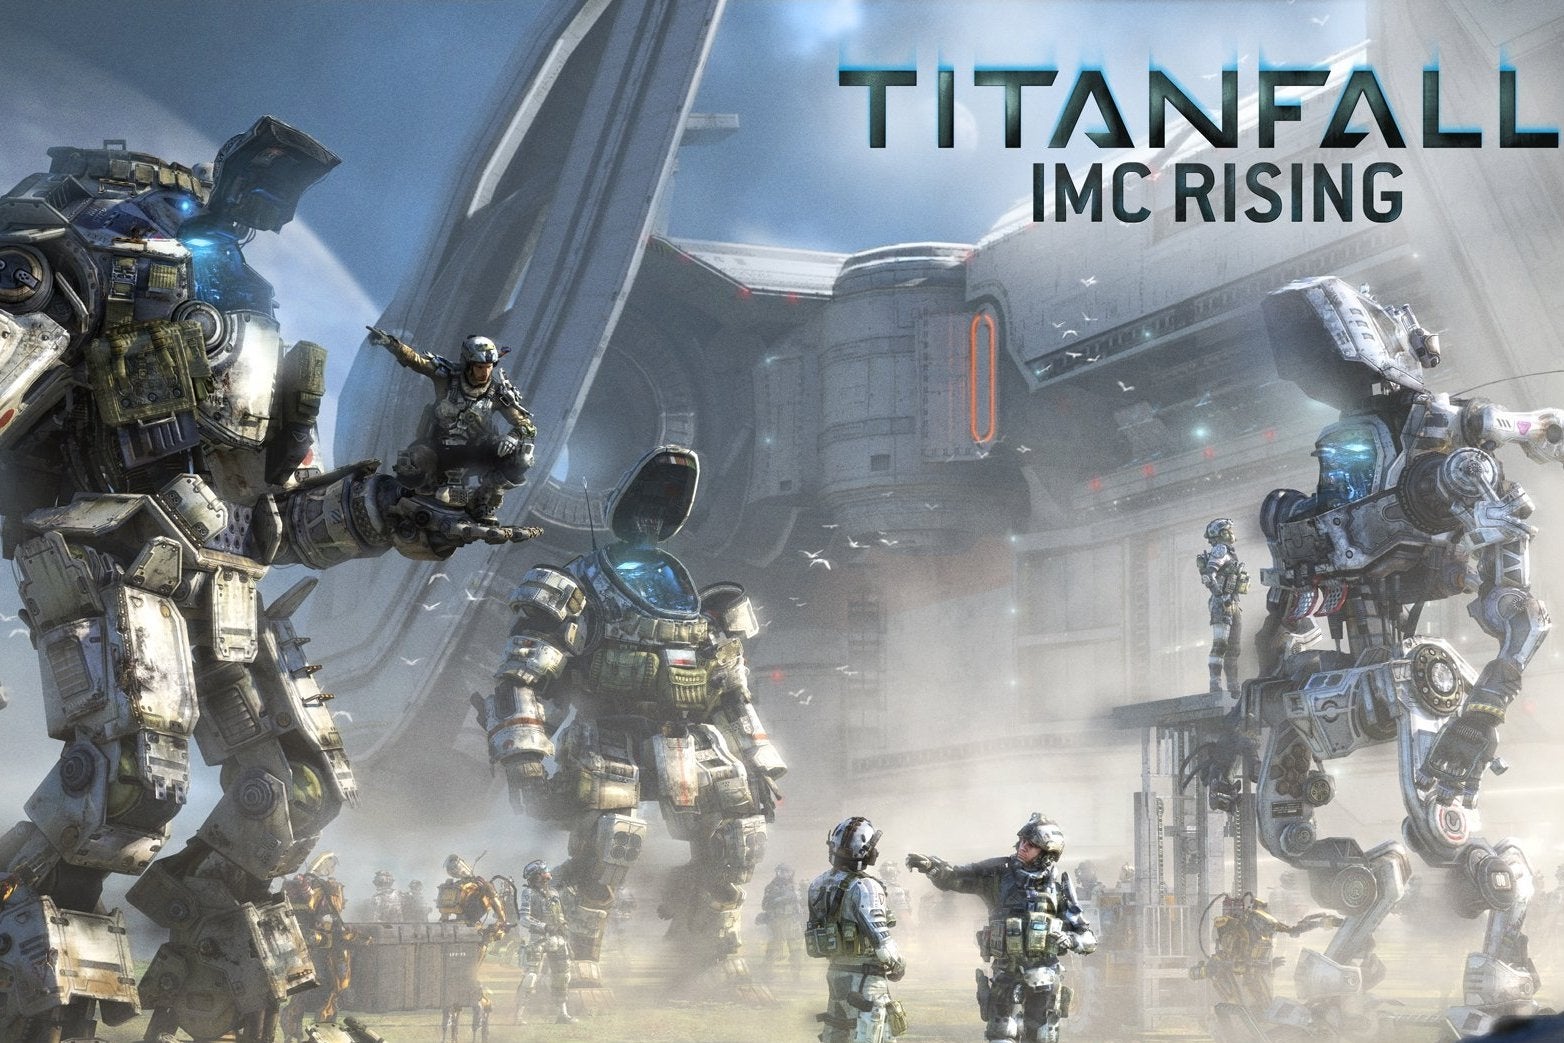 Imagen para Nuevo vídeo de Titanfall: IMC Rising